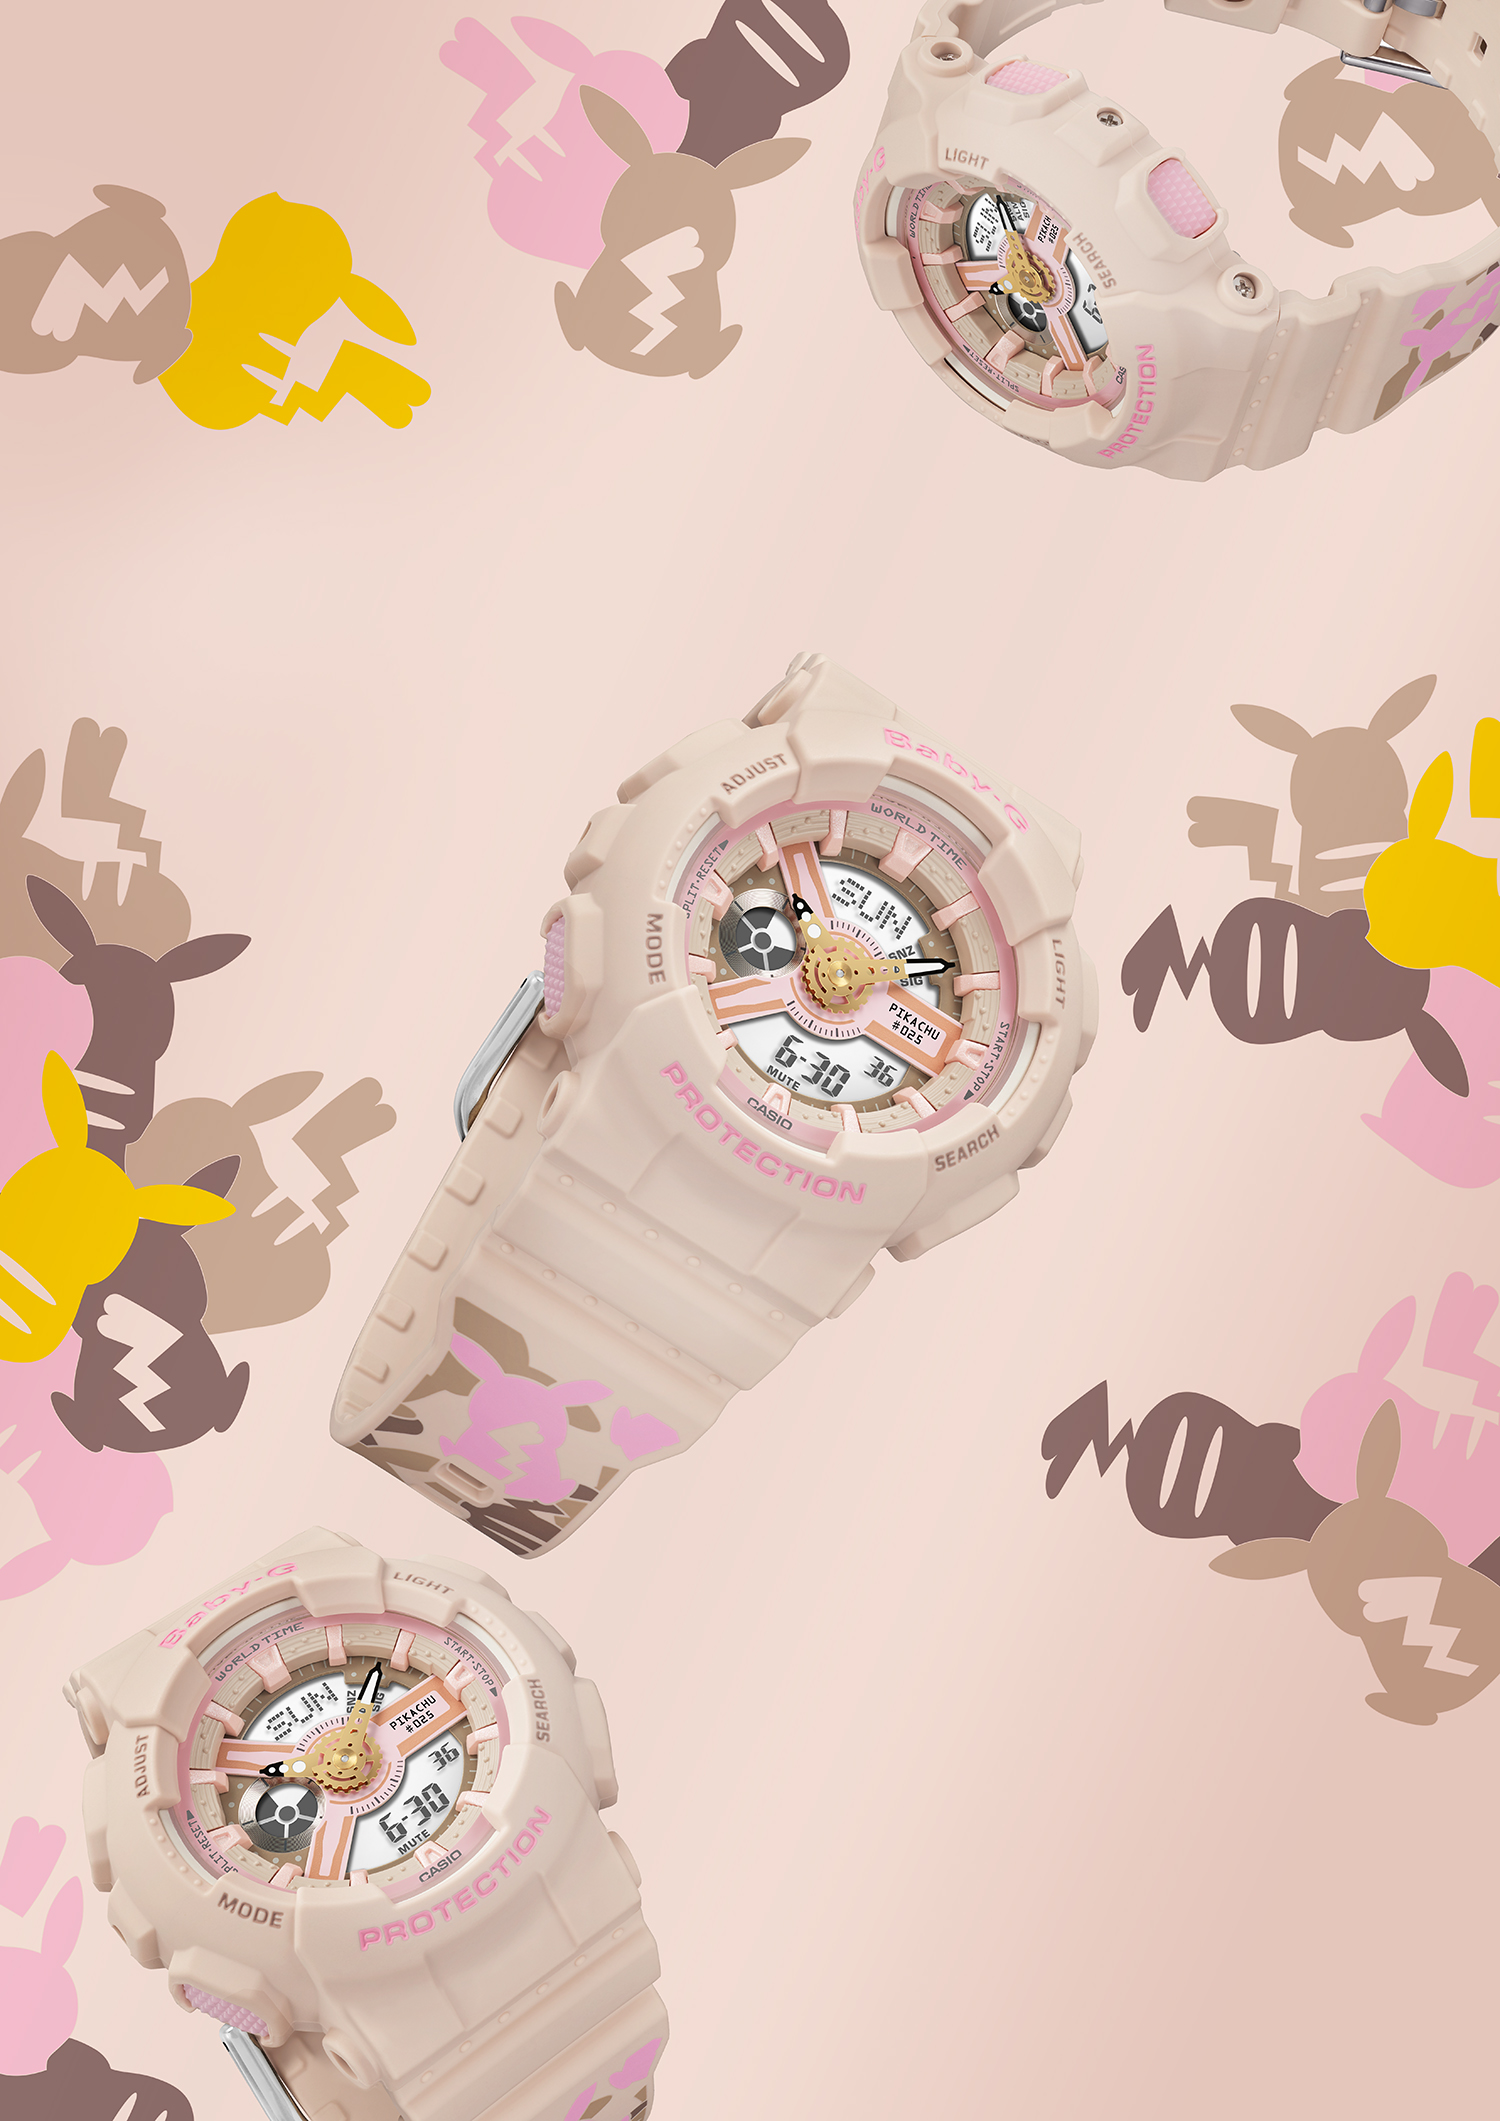 New限定品 Casio ピカチュウコラボモデル Baby G 腕時計 デジタル News Elegantsite Gr